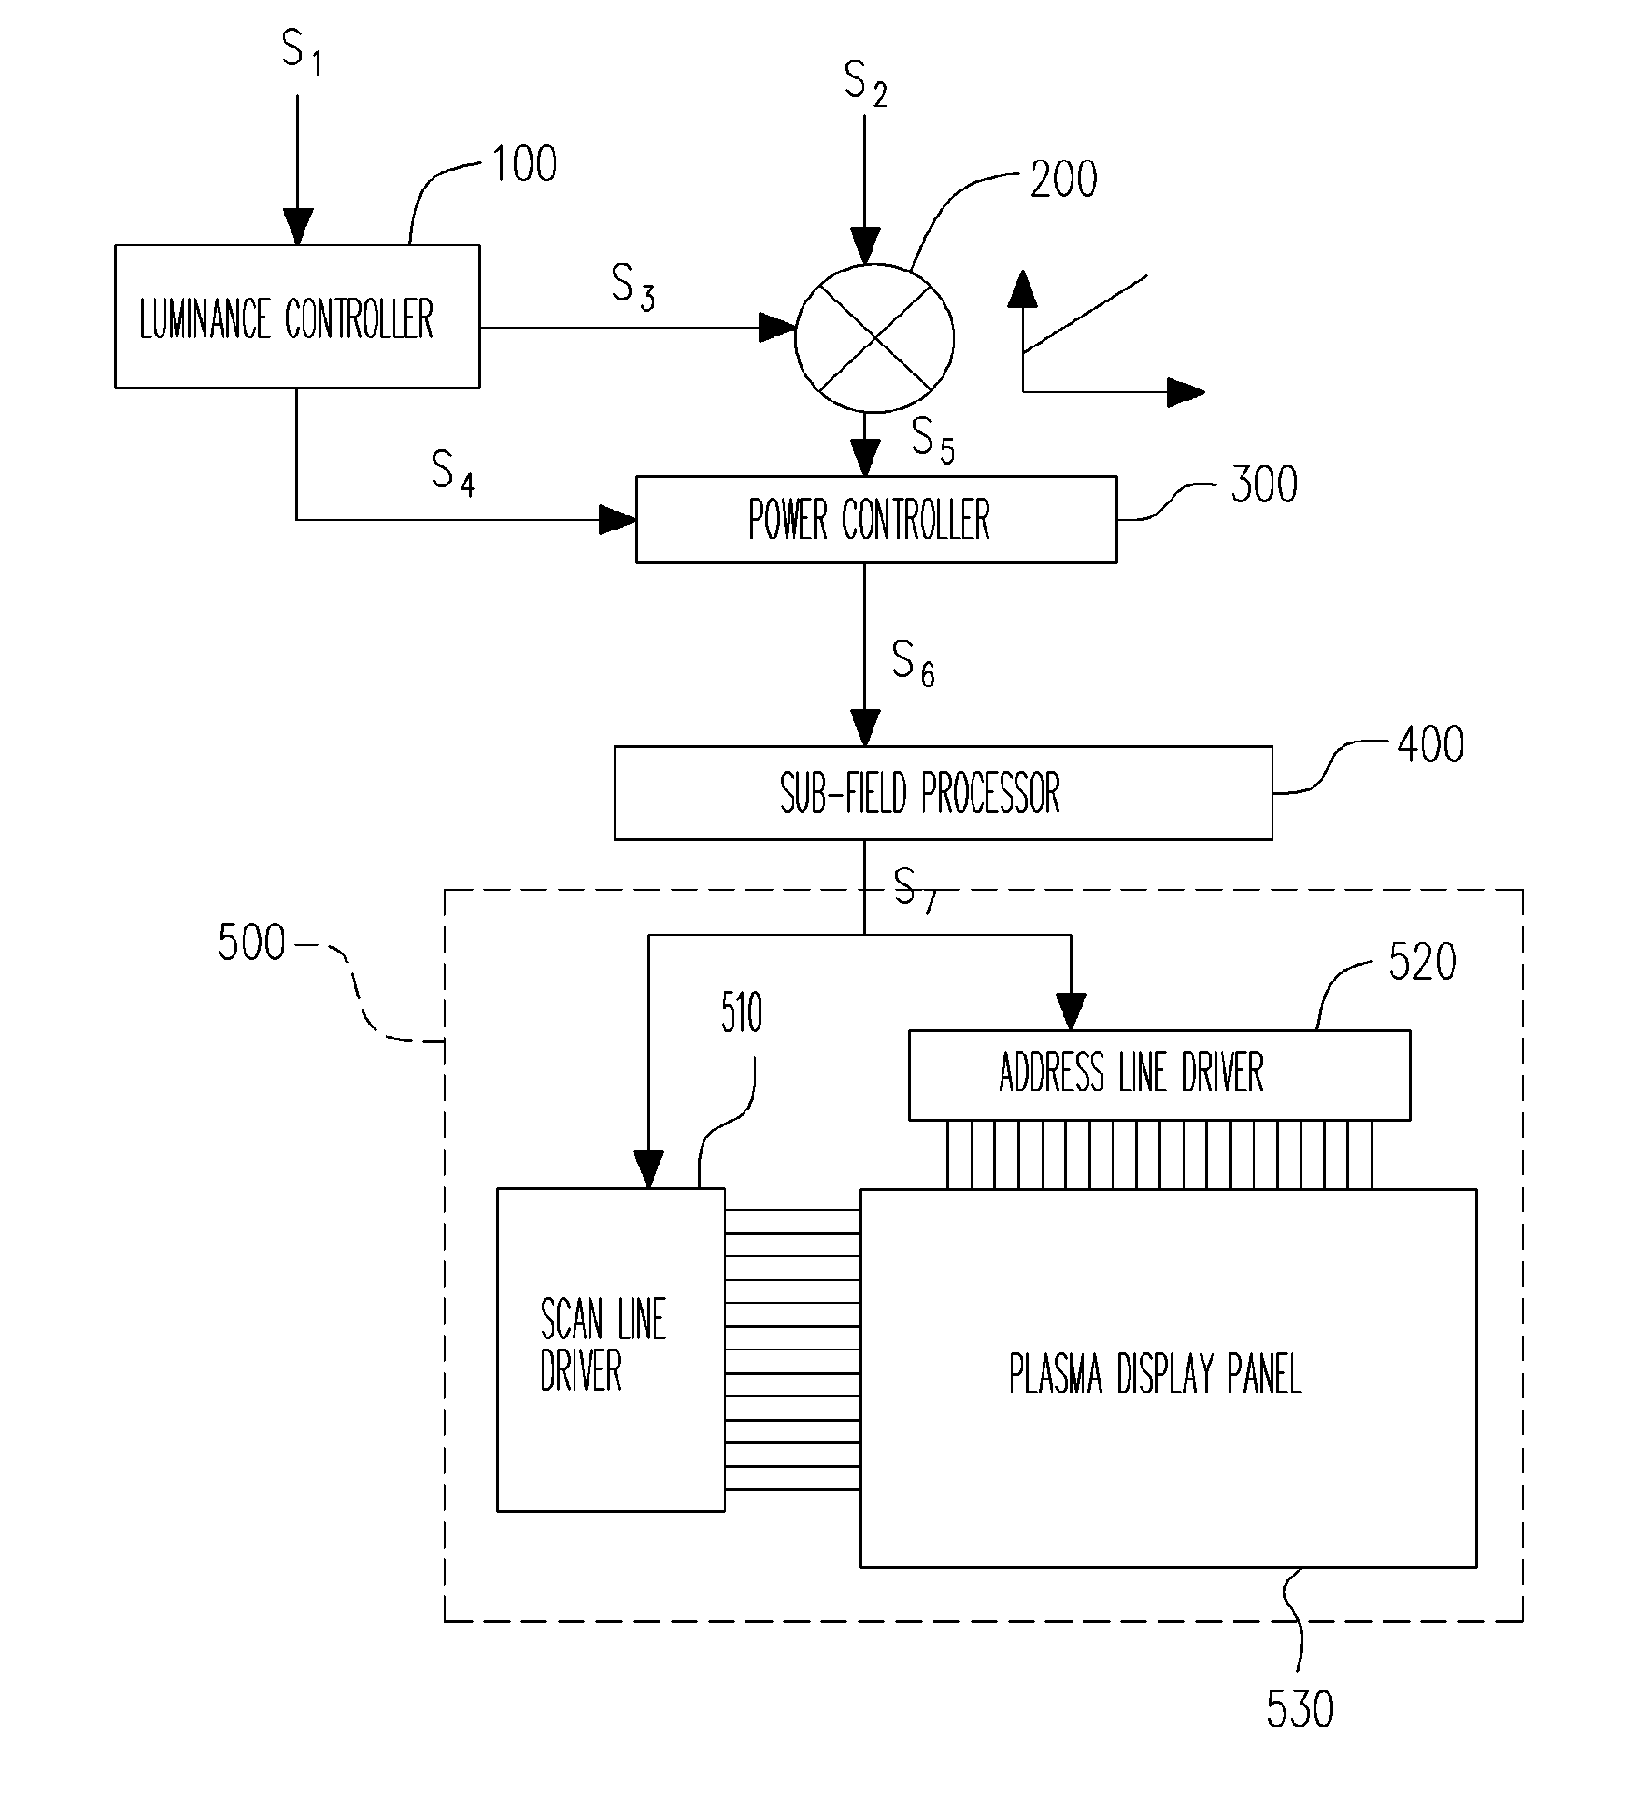 Apparatus and method for luminance adjustment of plasma display panel